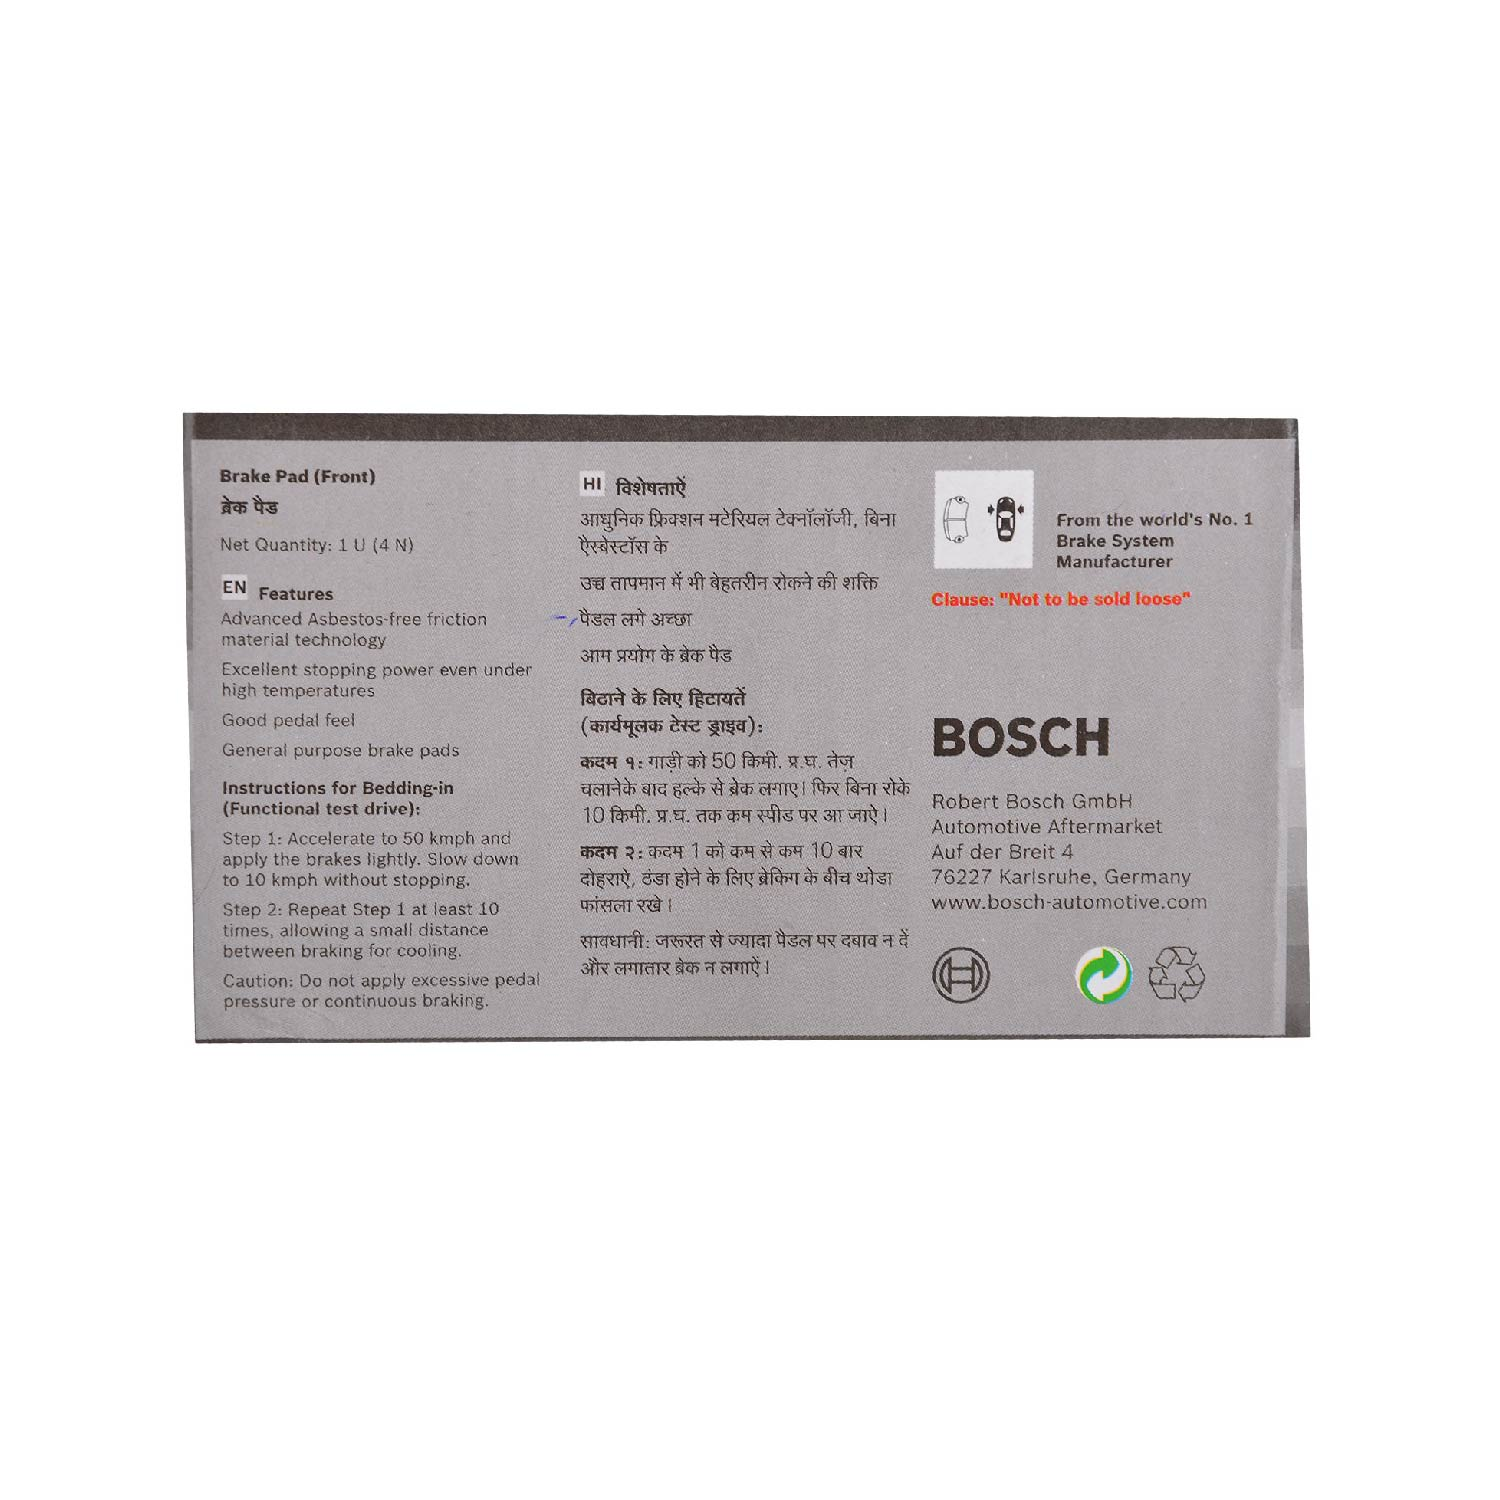 Bosch F002H236098F8 PD 609 Front Brake Pad for Mahindra Logan (Set of 4)